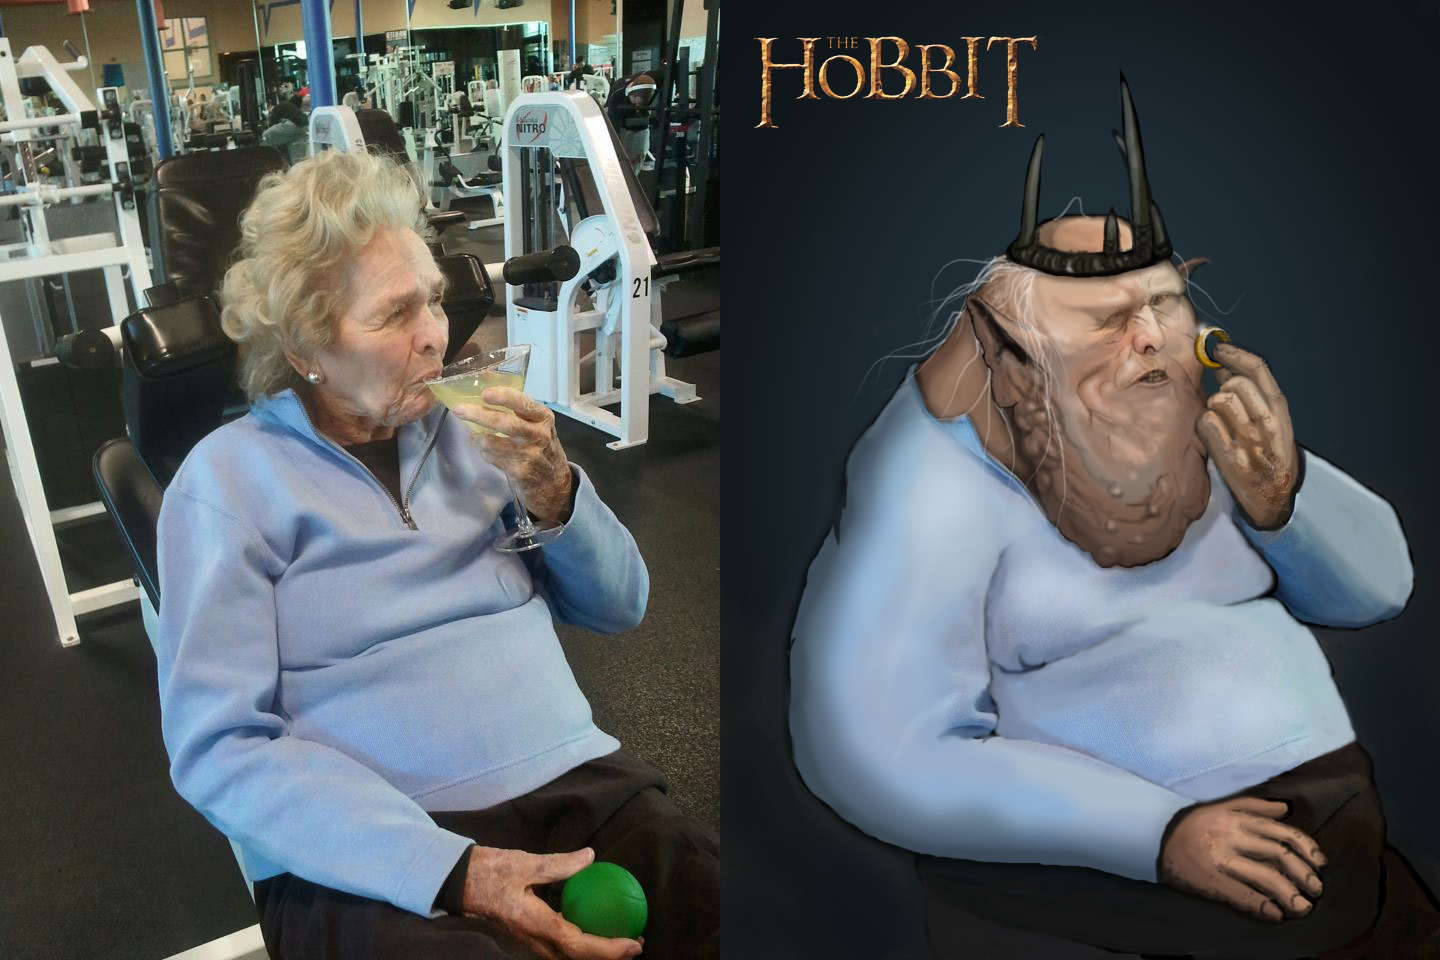 granny workout - Hobbit